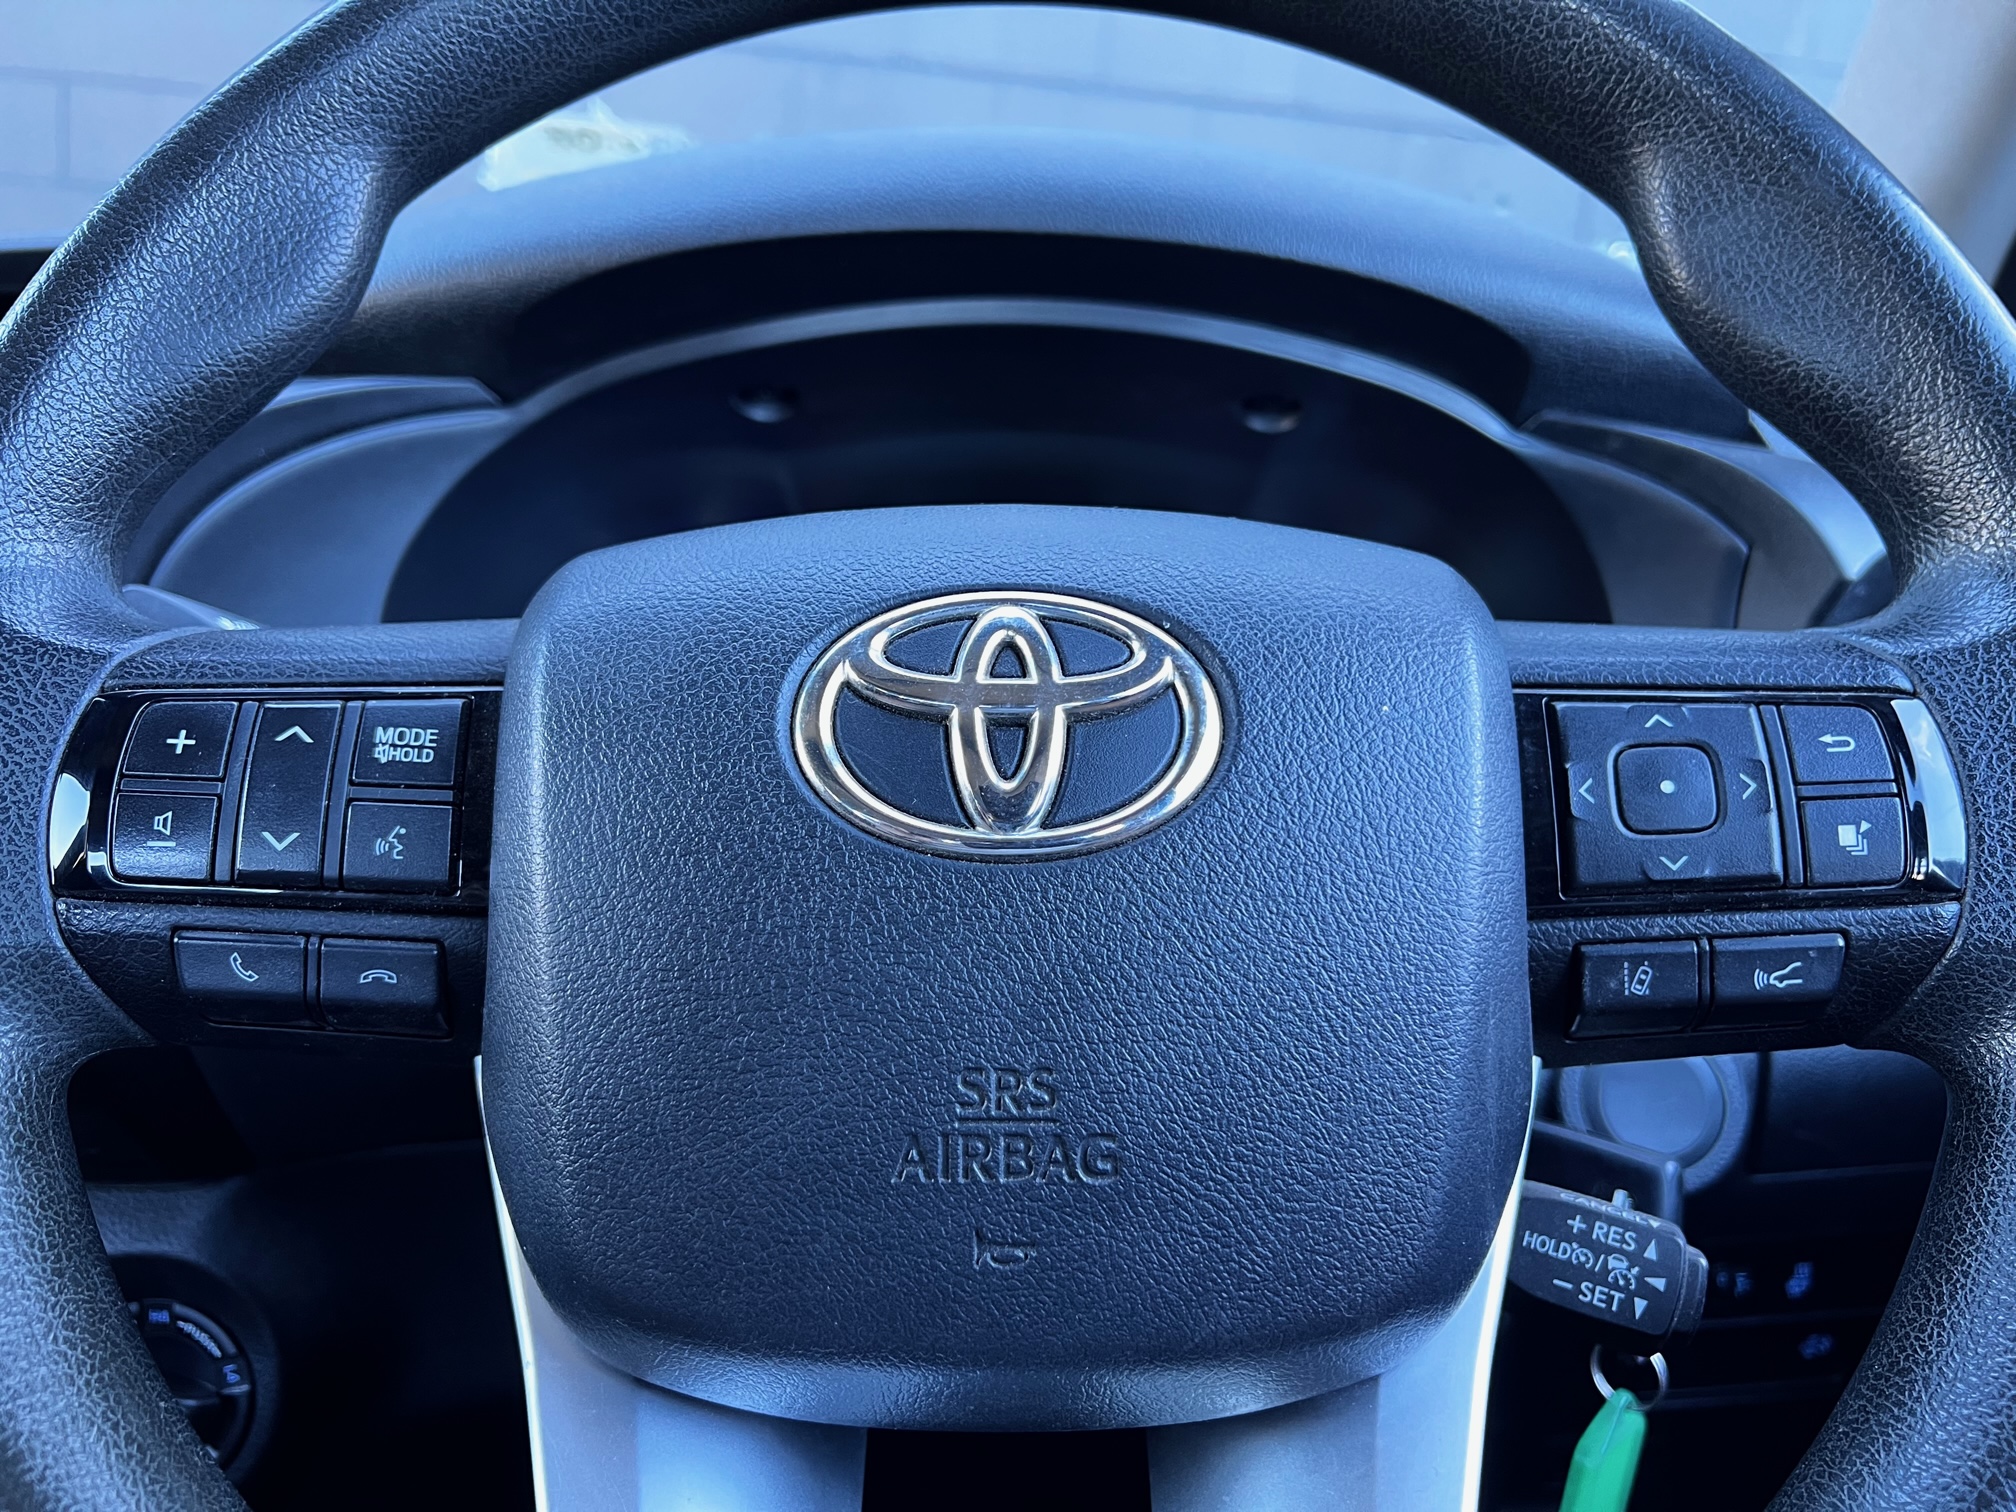 Toyota Hilux SR5 2019 Image 17